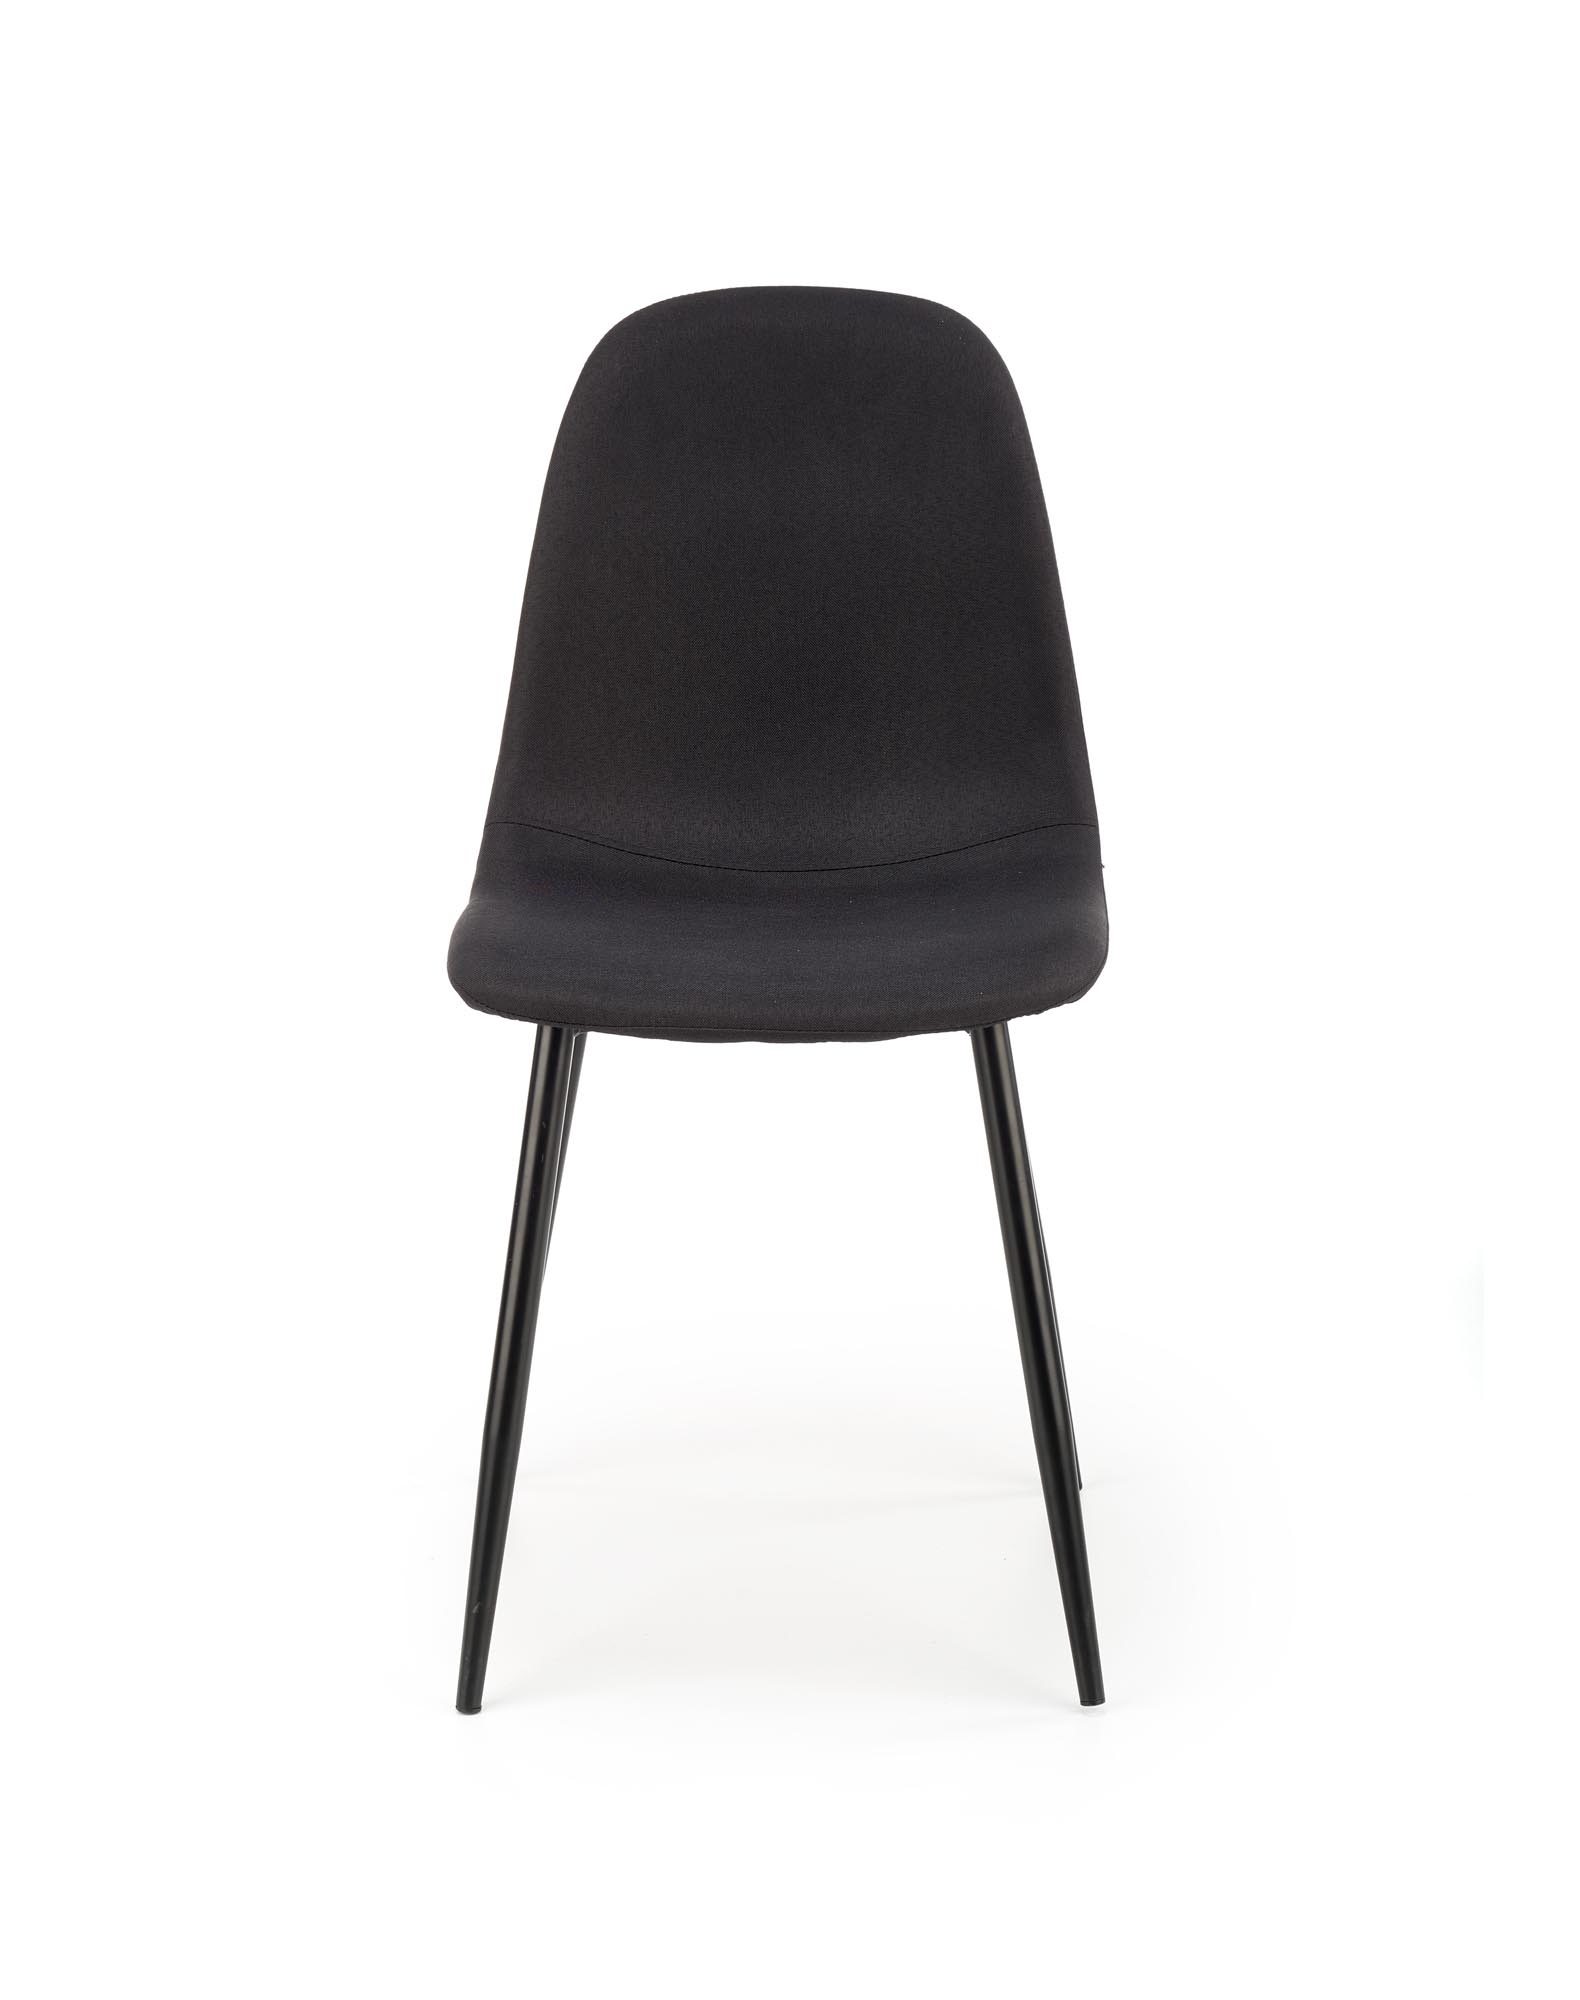 K449 stolica, boja: crna